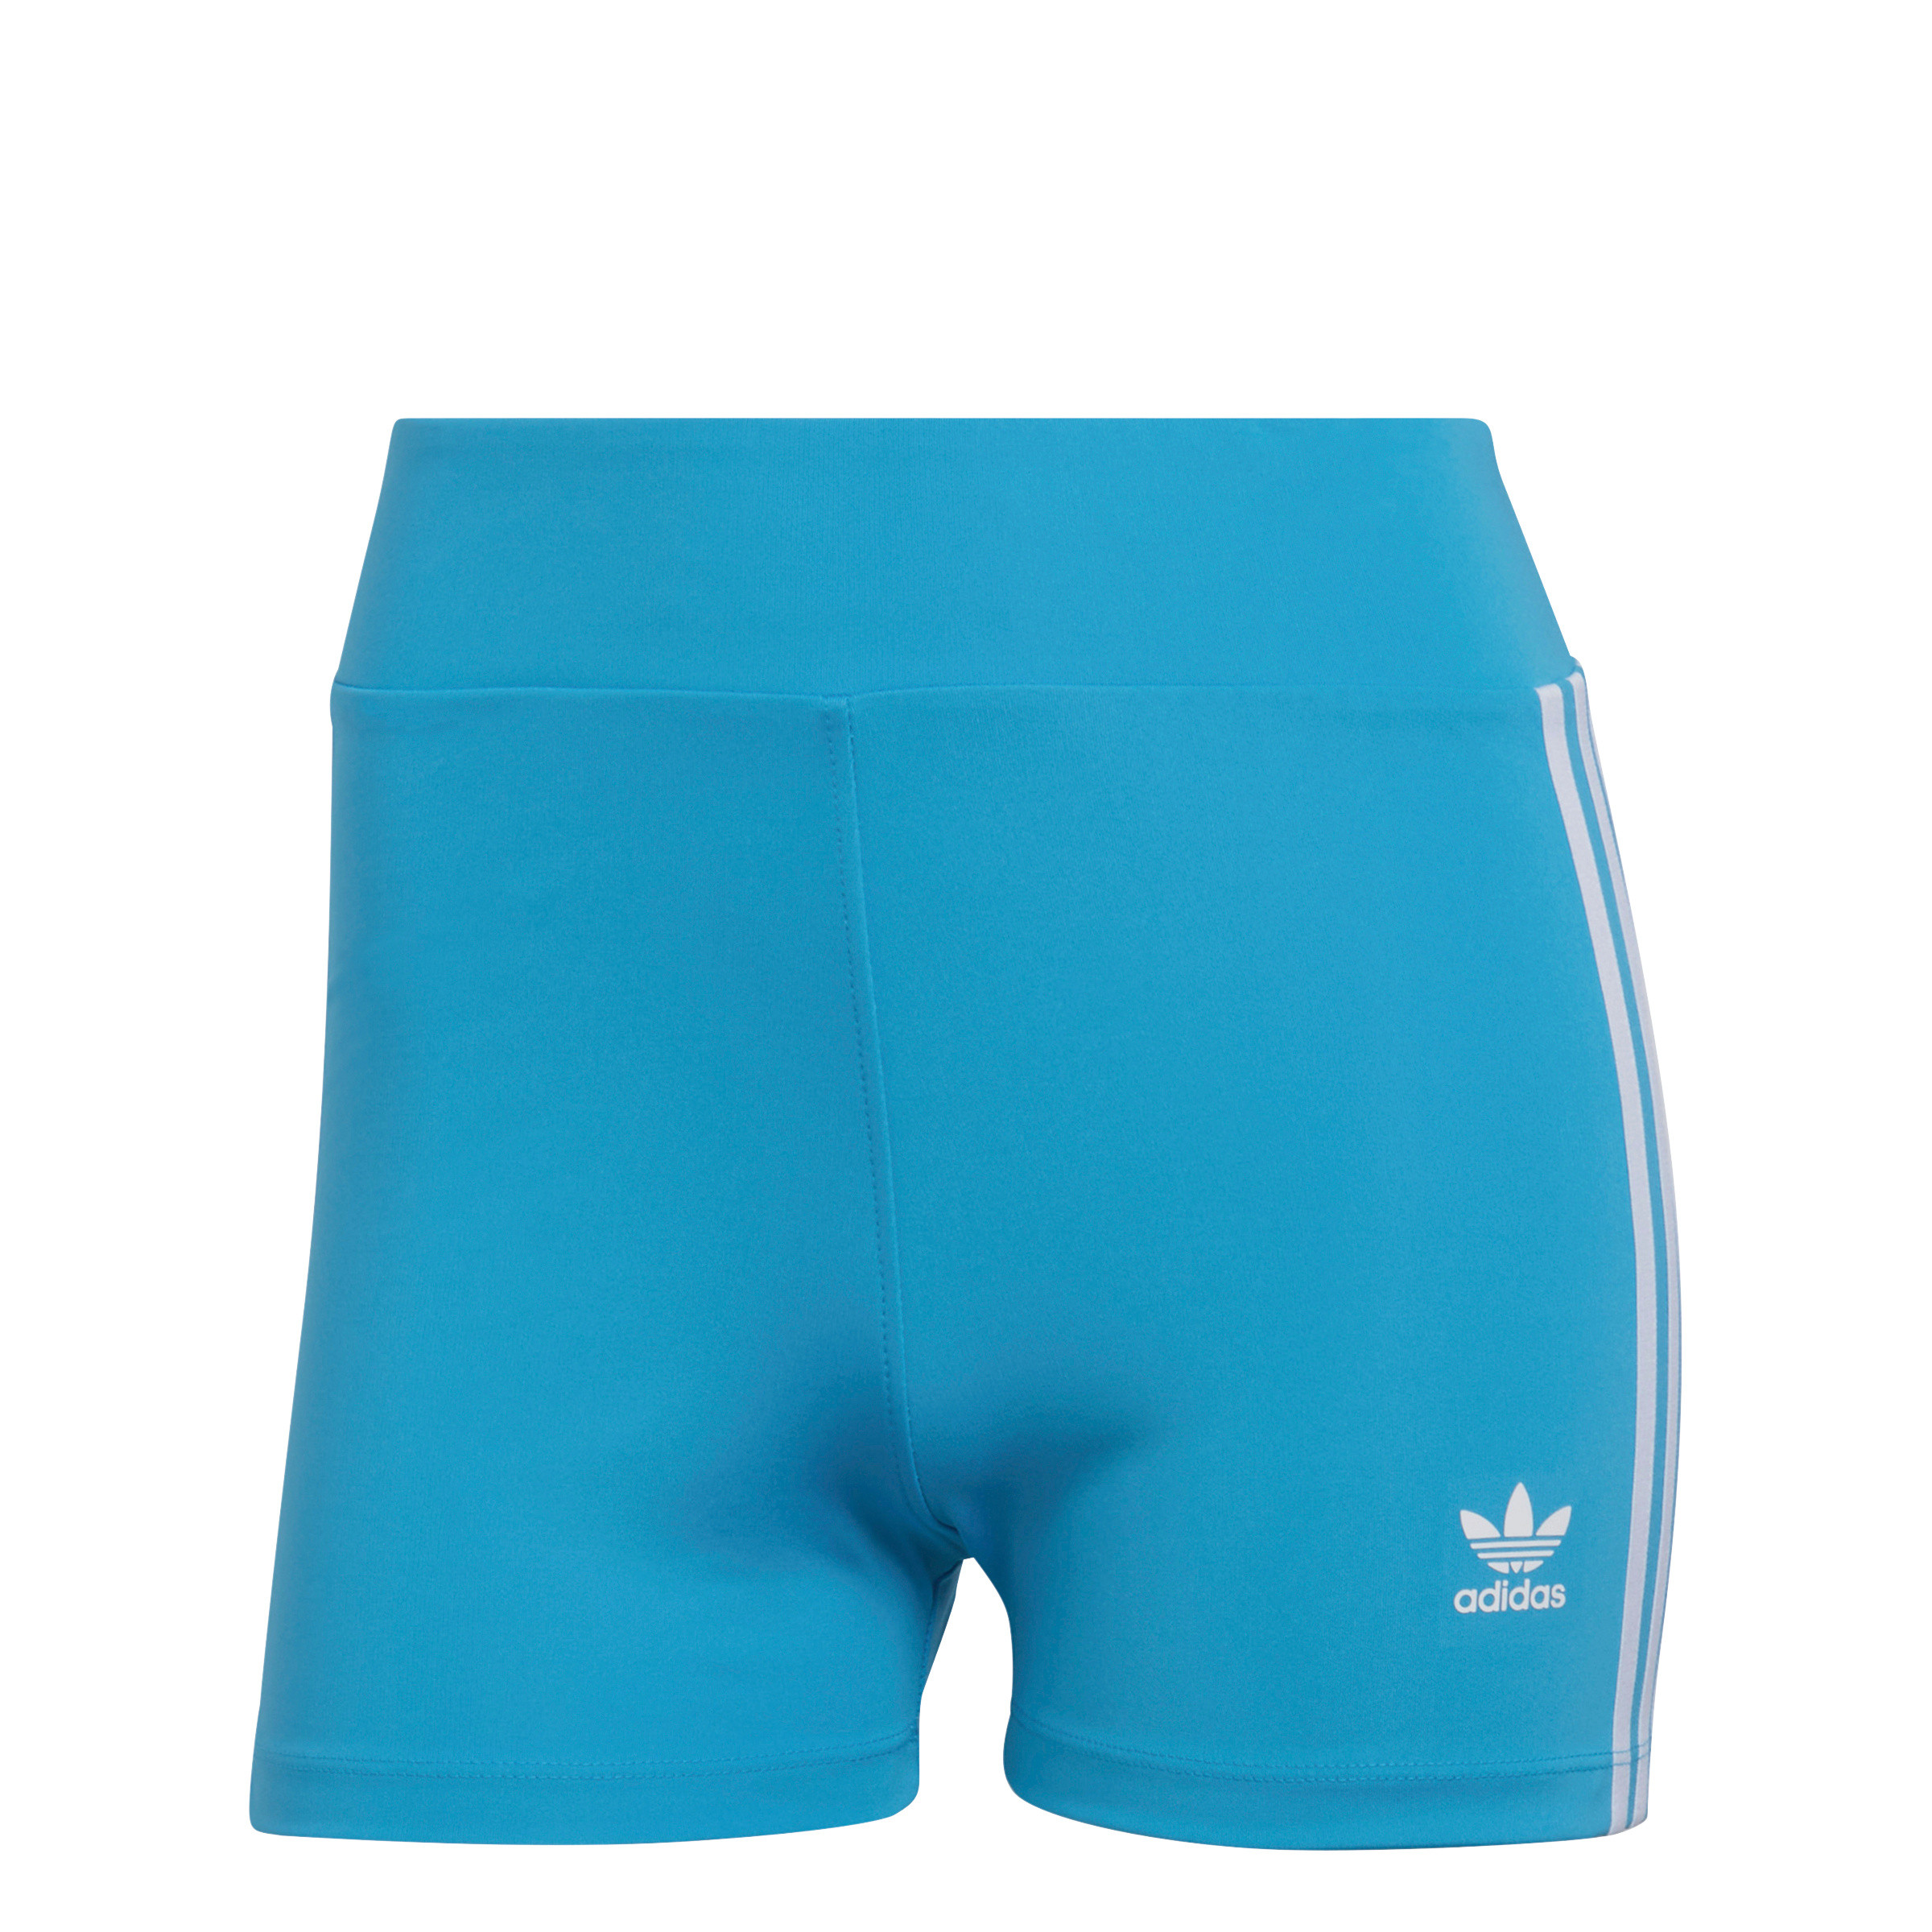 Adicolor shorts, Light Blue, large image number 0